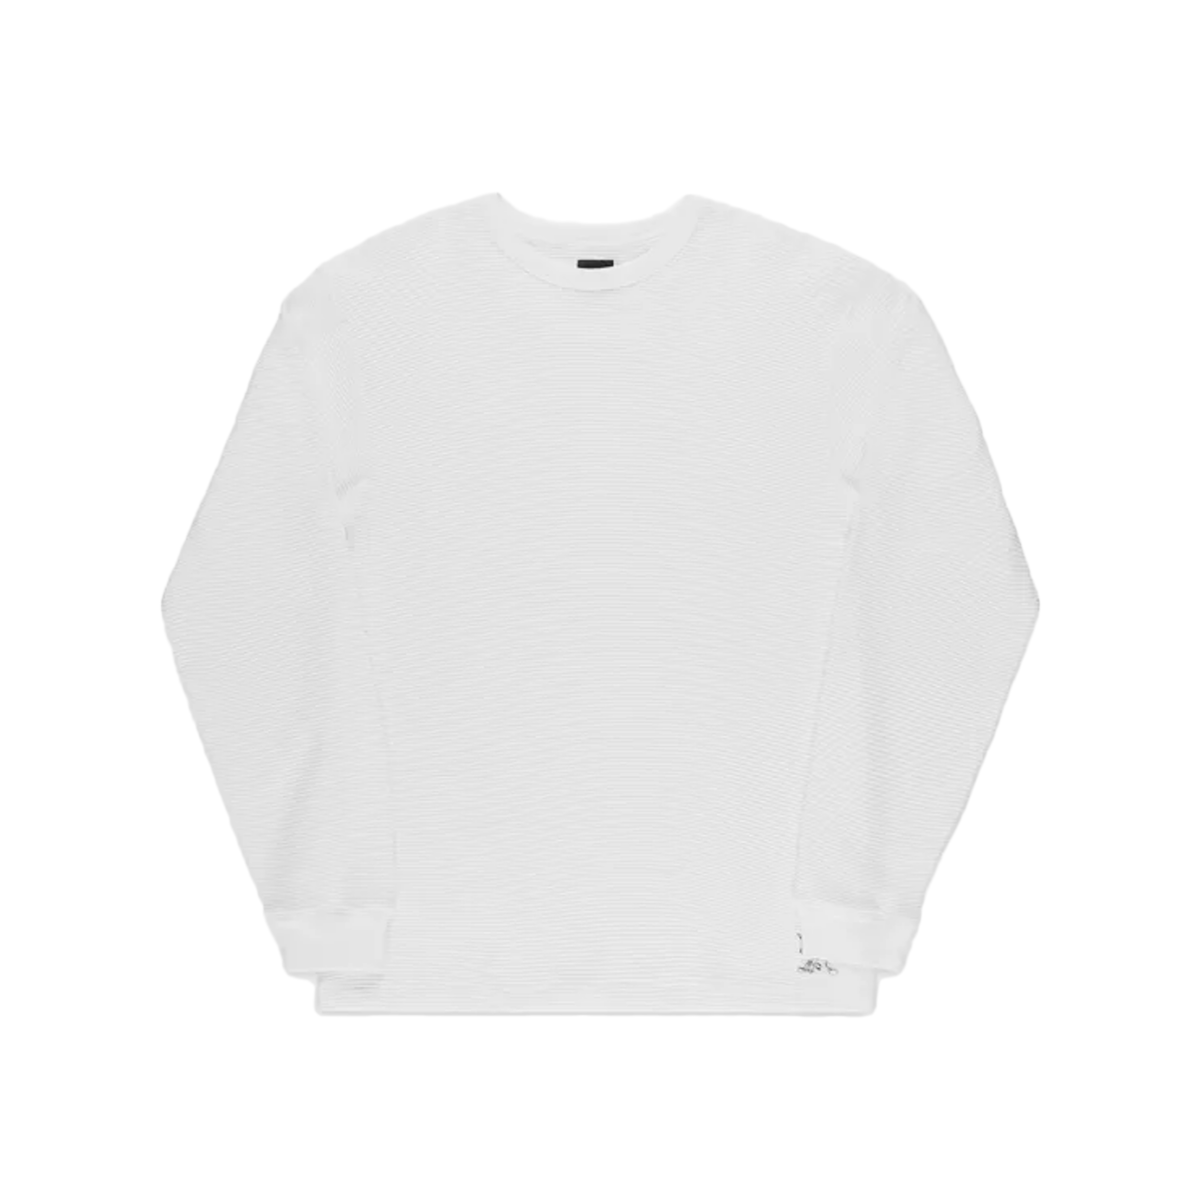 Vans Nick Michel Long Sleeve Thermal Shirt - White